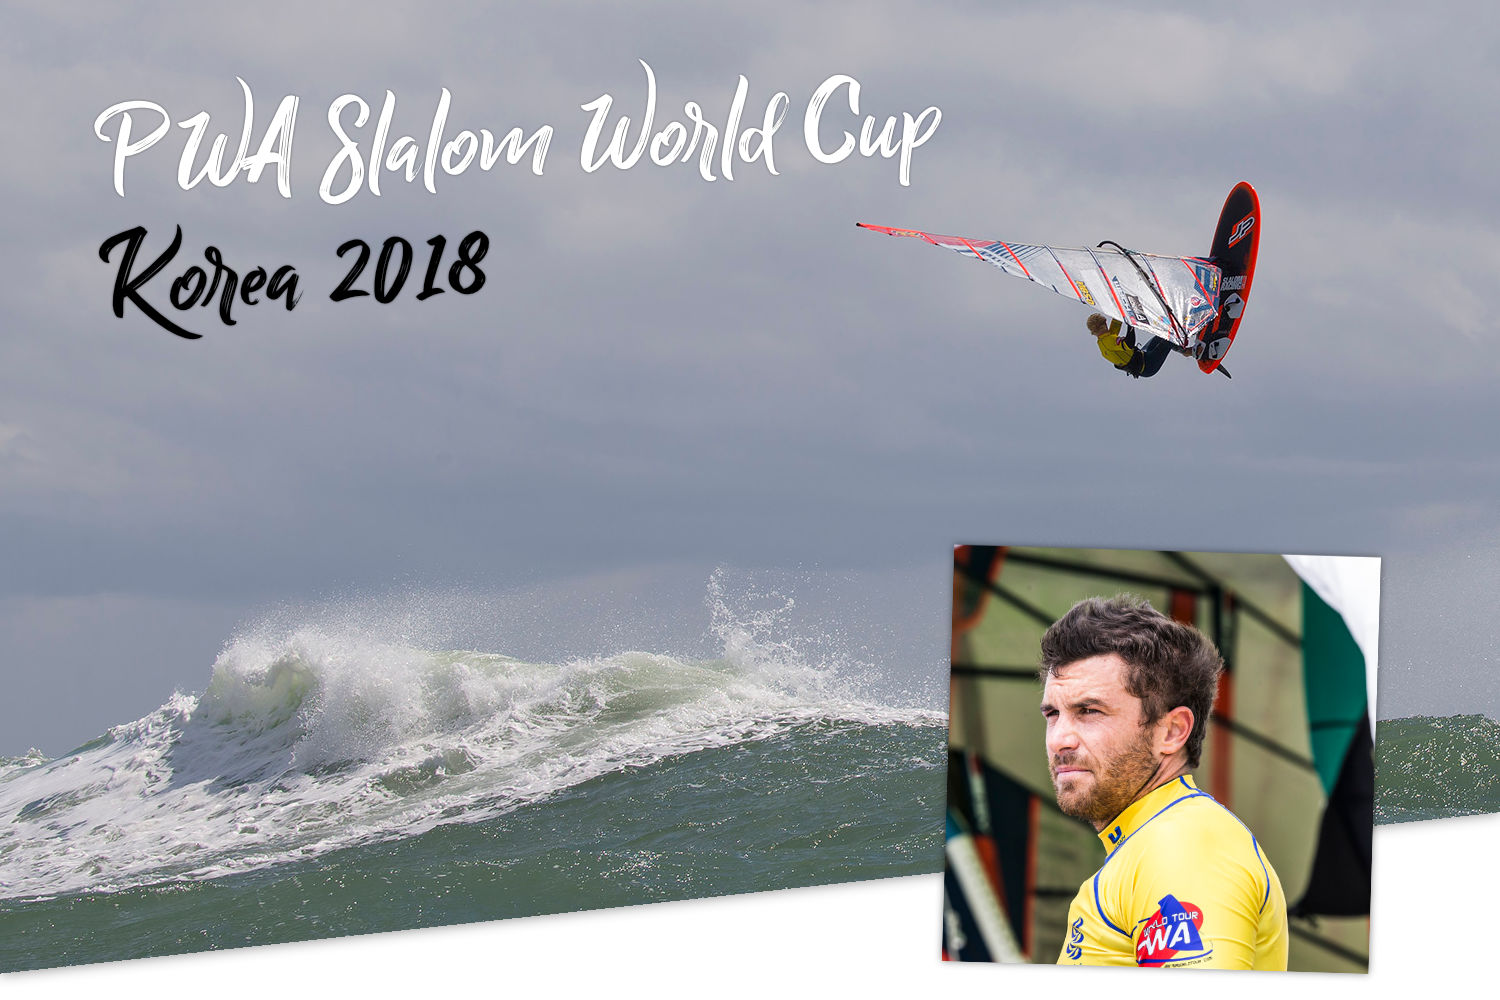 PWA Slalom World Cup - Korea 2018